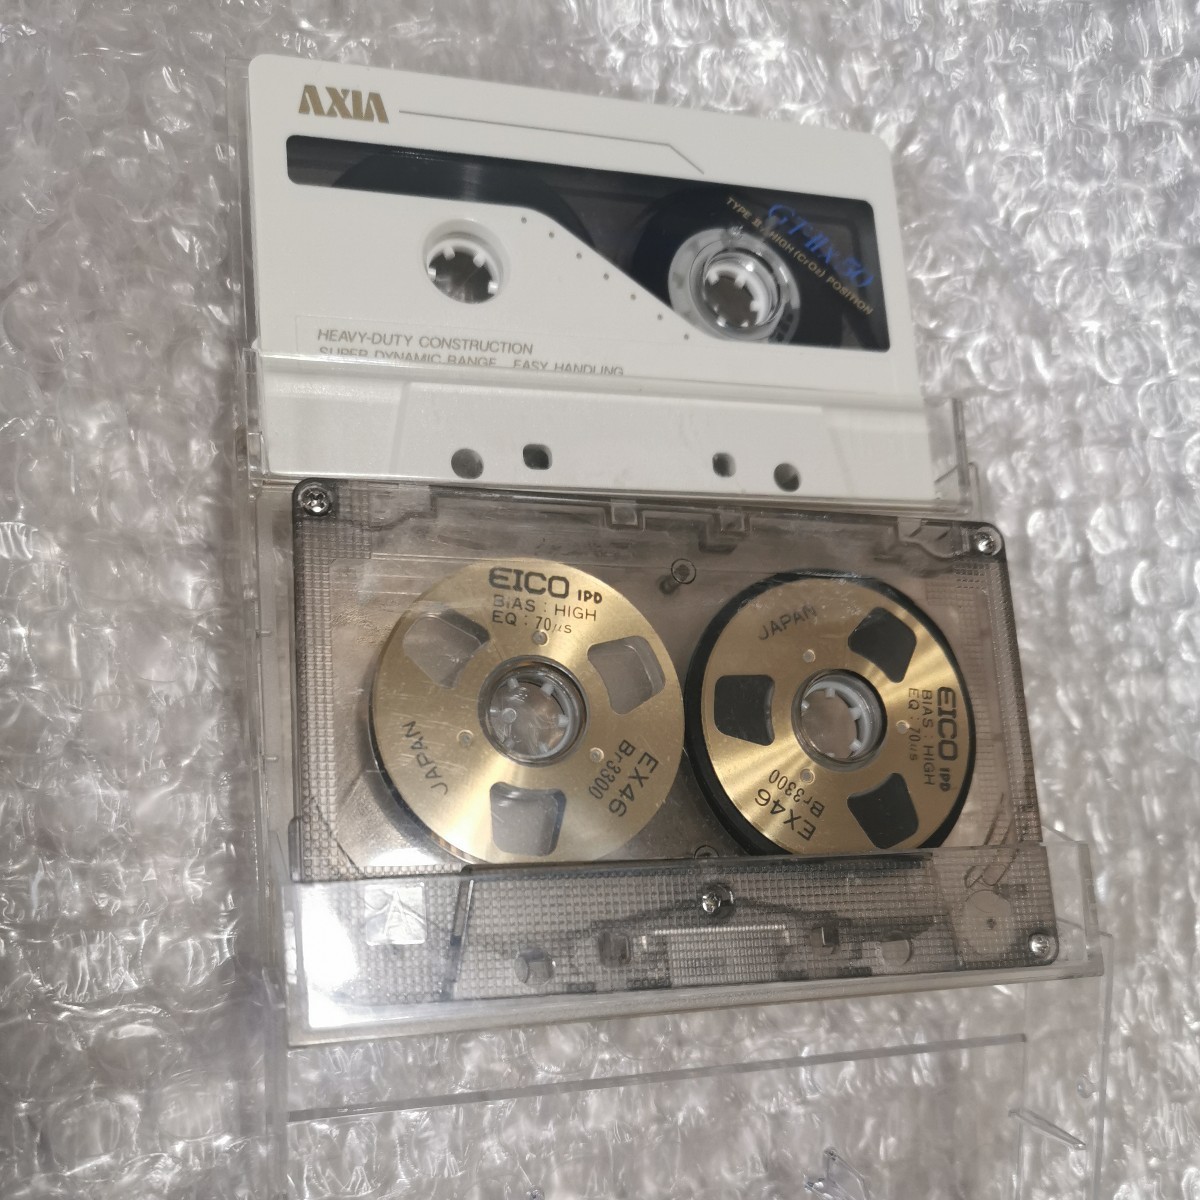 O カセットテープ 2本 中古 AXIA GT-Ⅱx 50分 ハイポジ EICO EX 46　Br 3000 使用済み_画像1